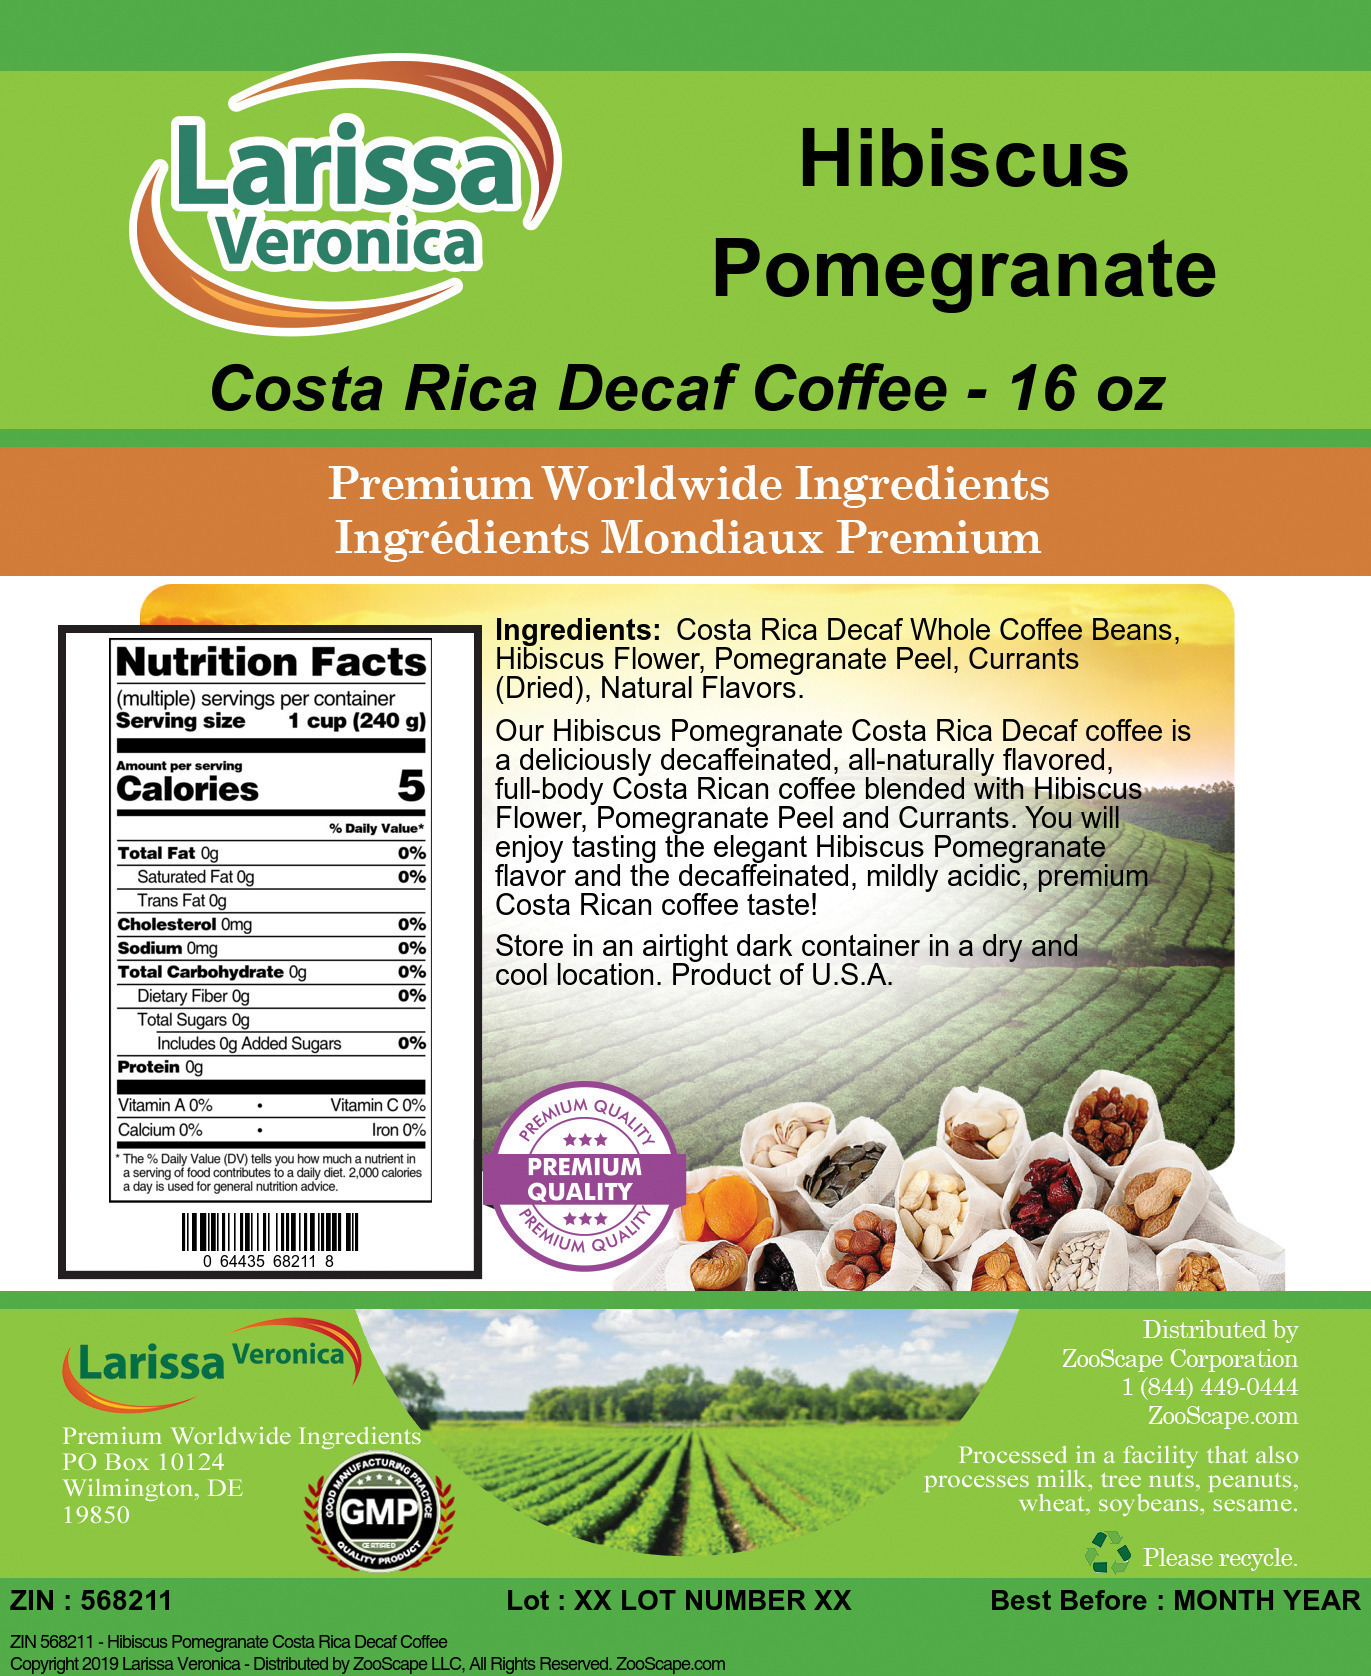 Hibiscus Pomegranate Costa Rica Decaf Coffee - Label